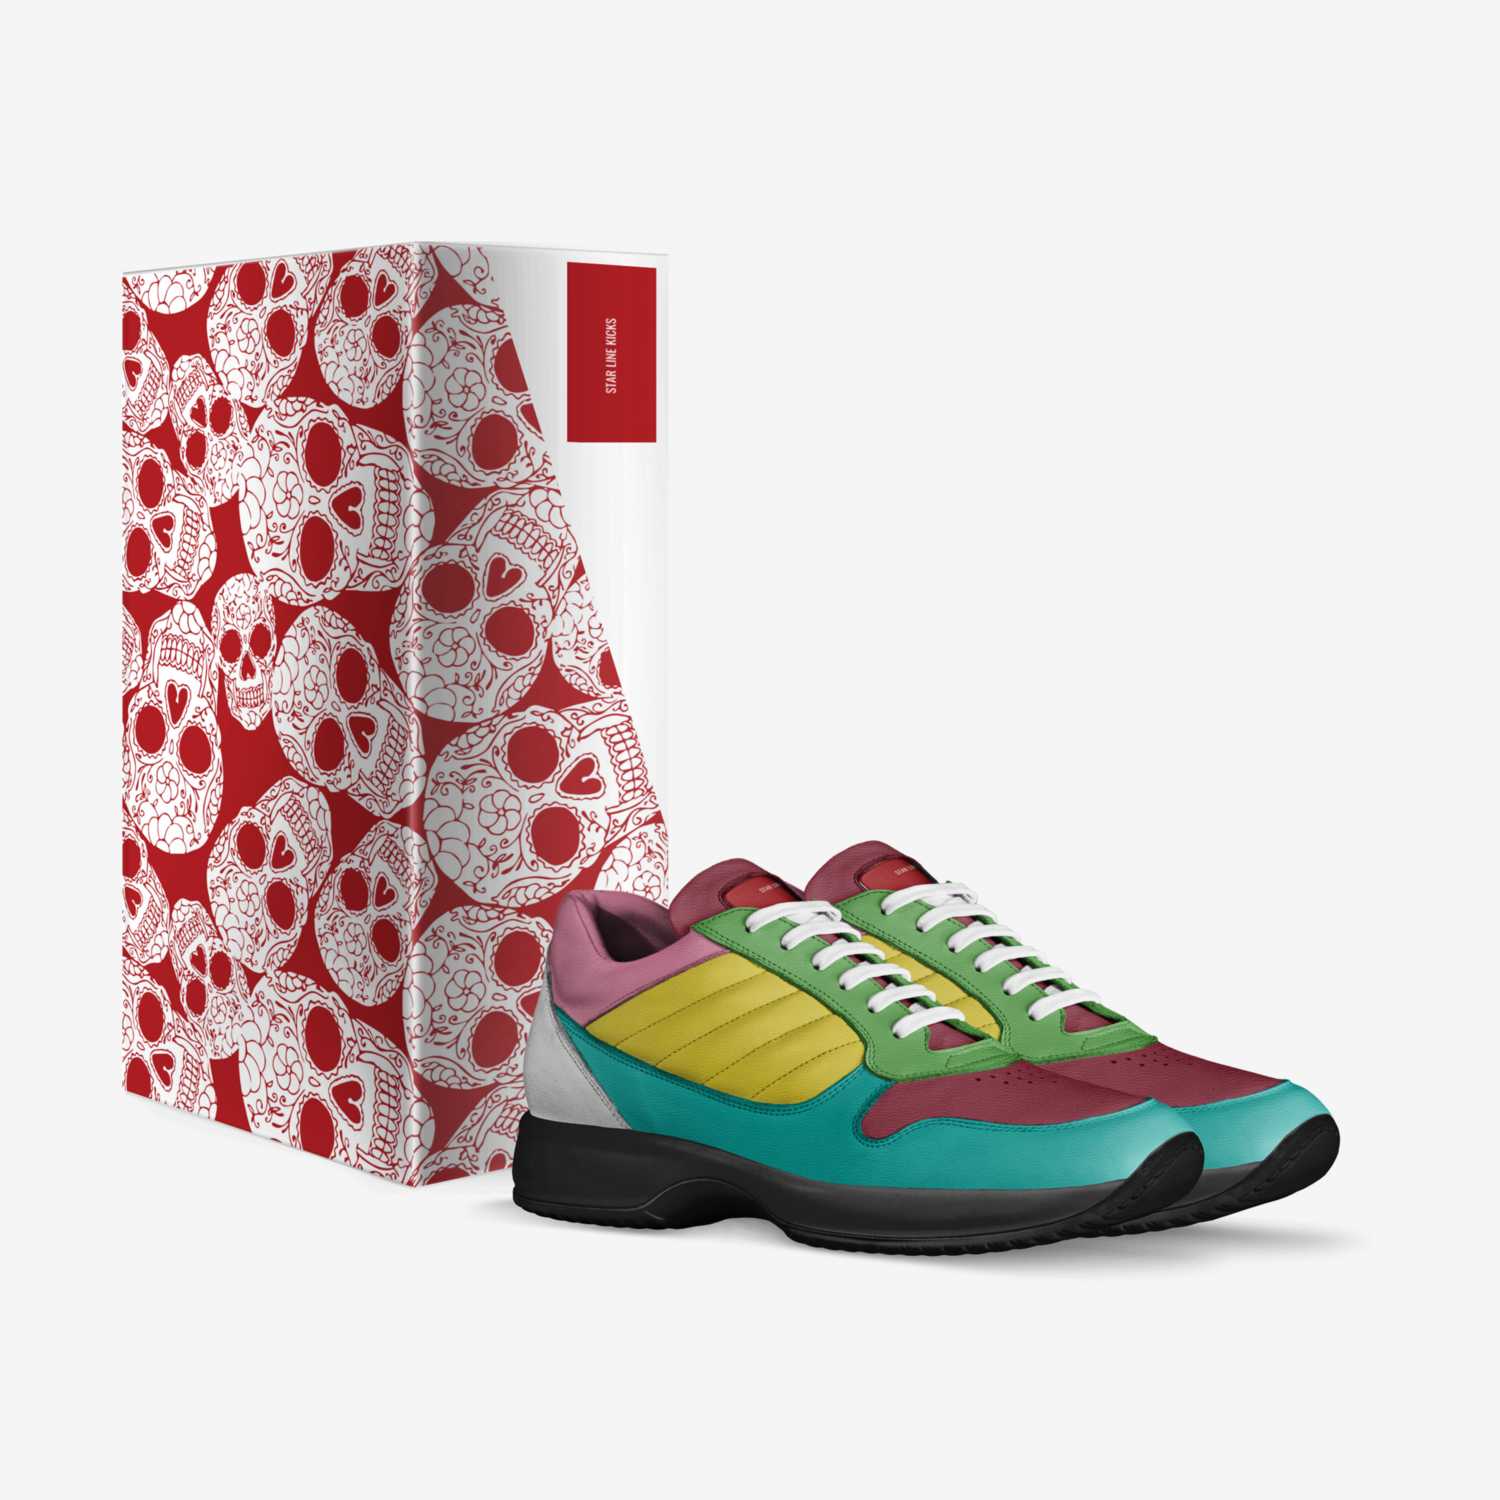 star line kicks custom made in Italy shoes by Olivia Coates | Box view